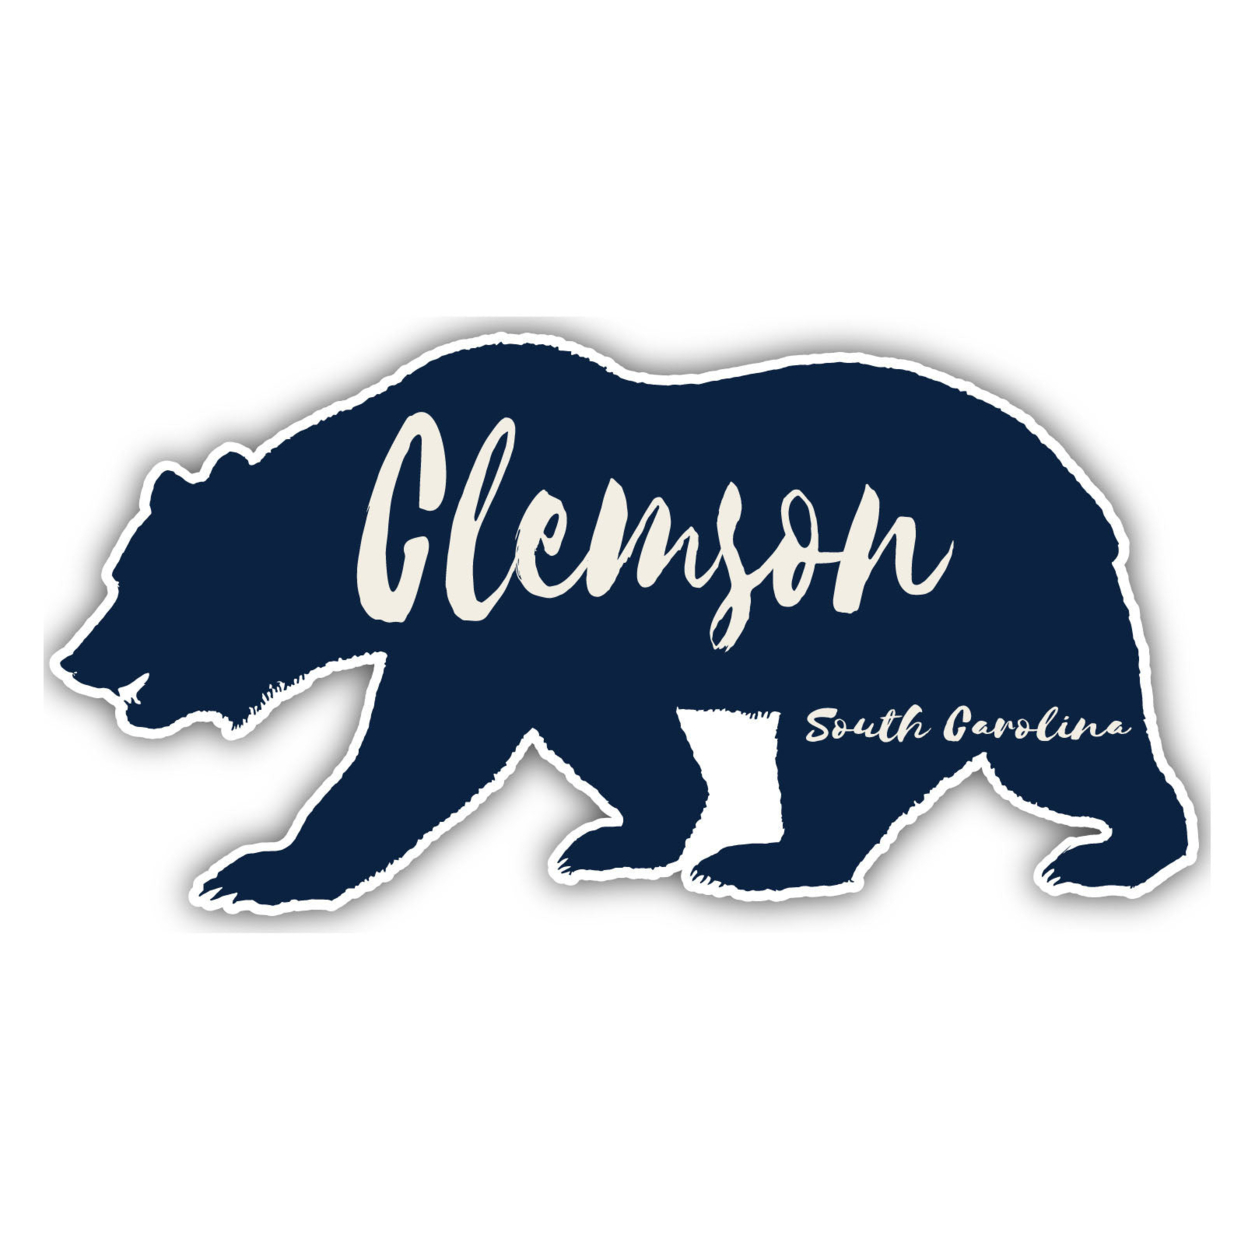 Clemson South Carolina Souvenir Decorative Stickers (Choose Theme And Size) - Single Unit, 4-Inch, Tent